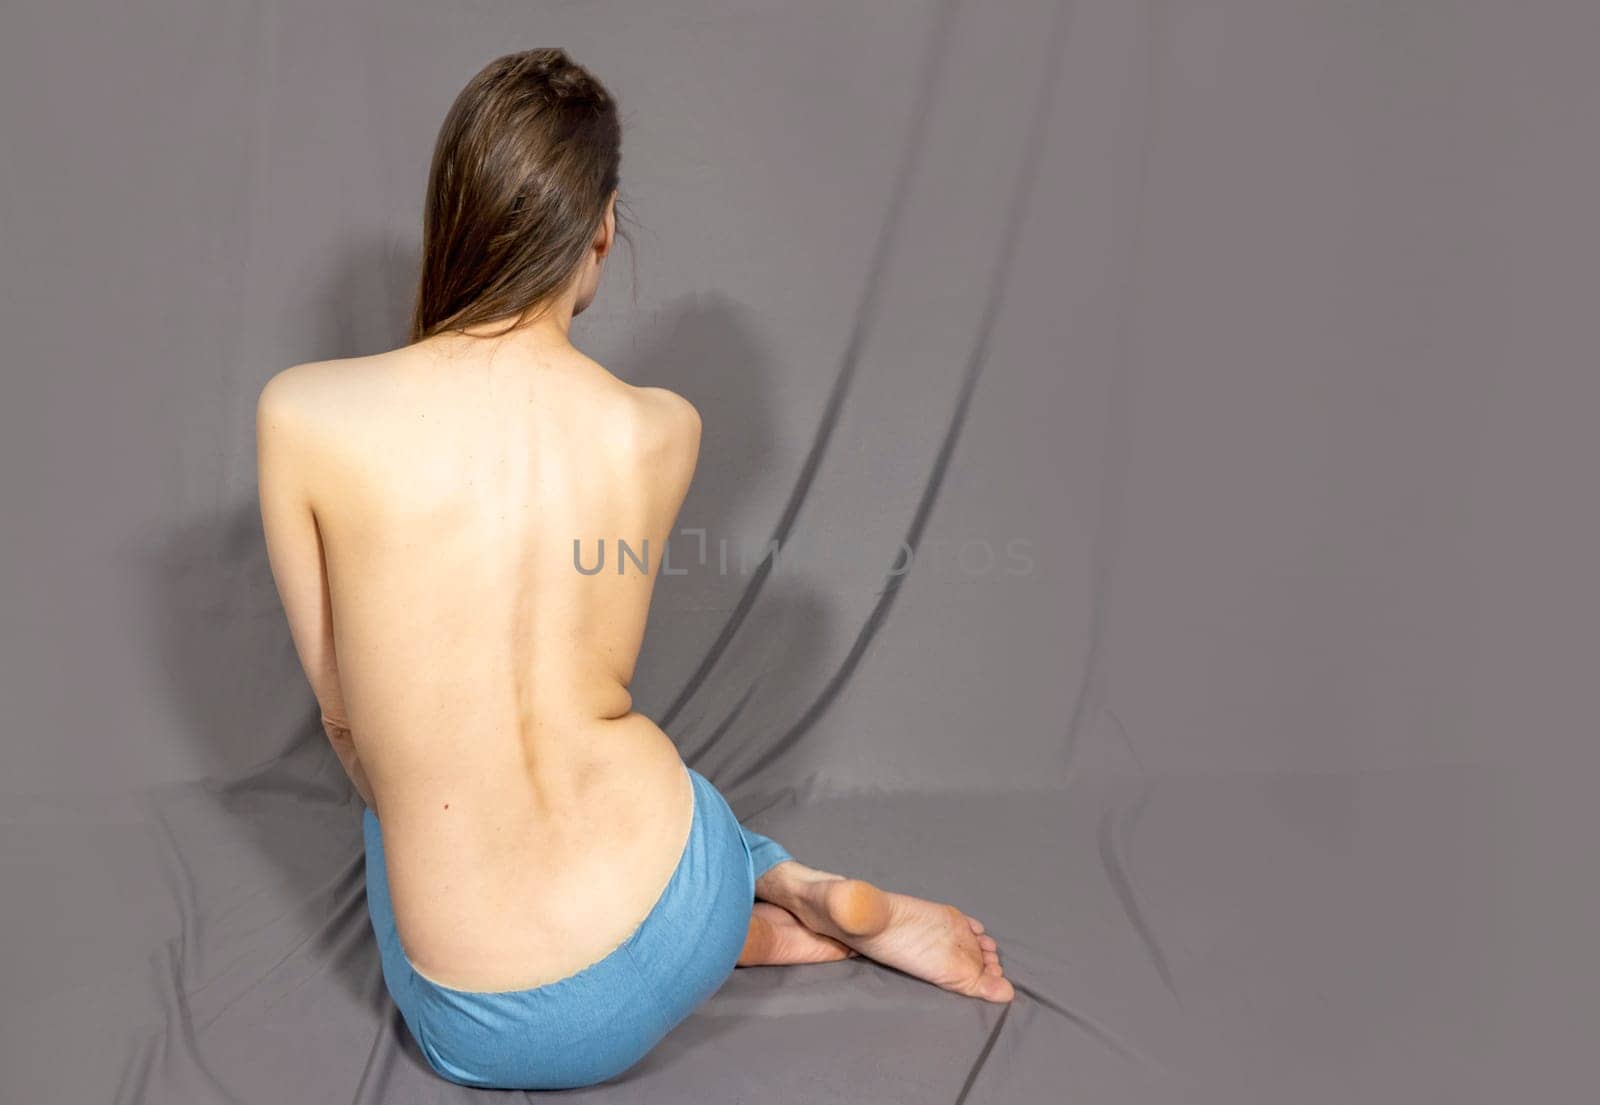 The beautiful woman's body on gray background by kajasja